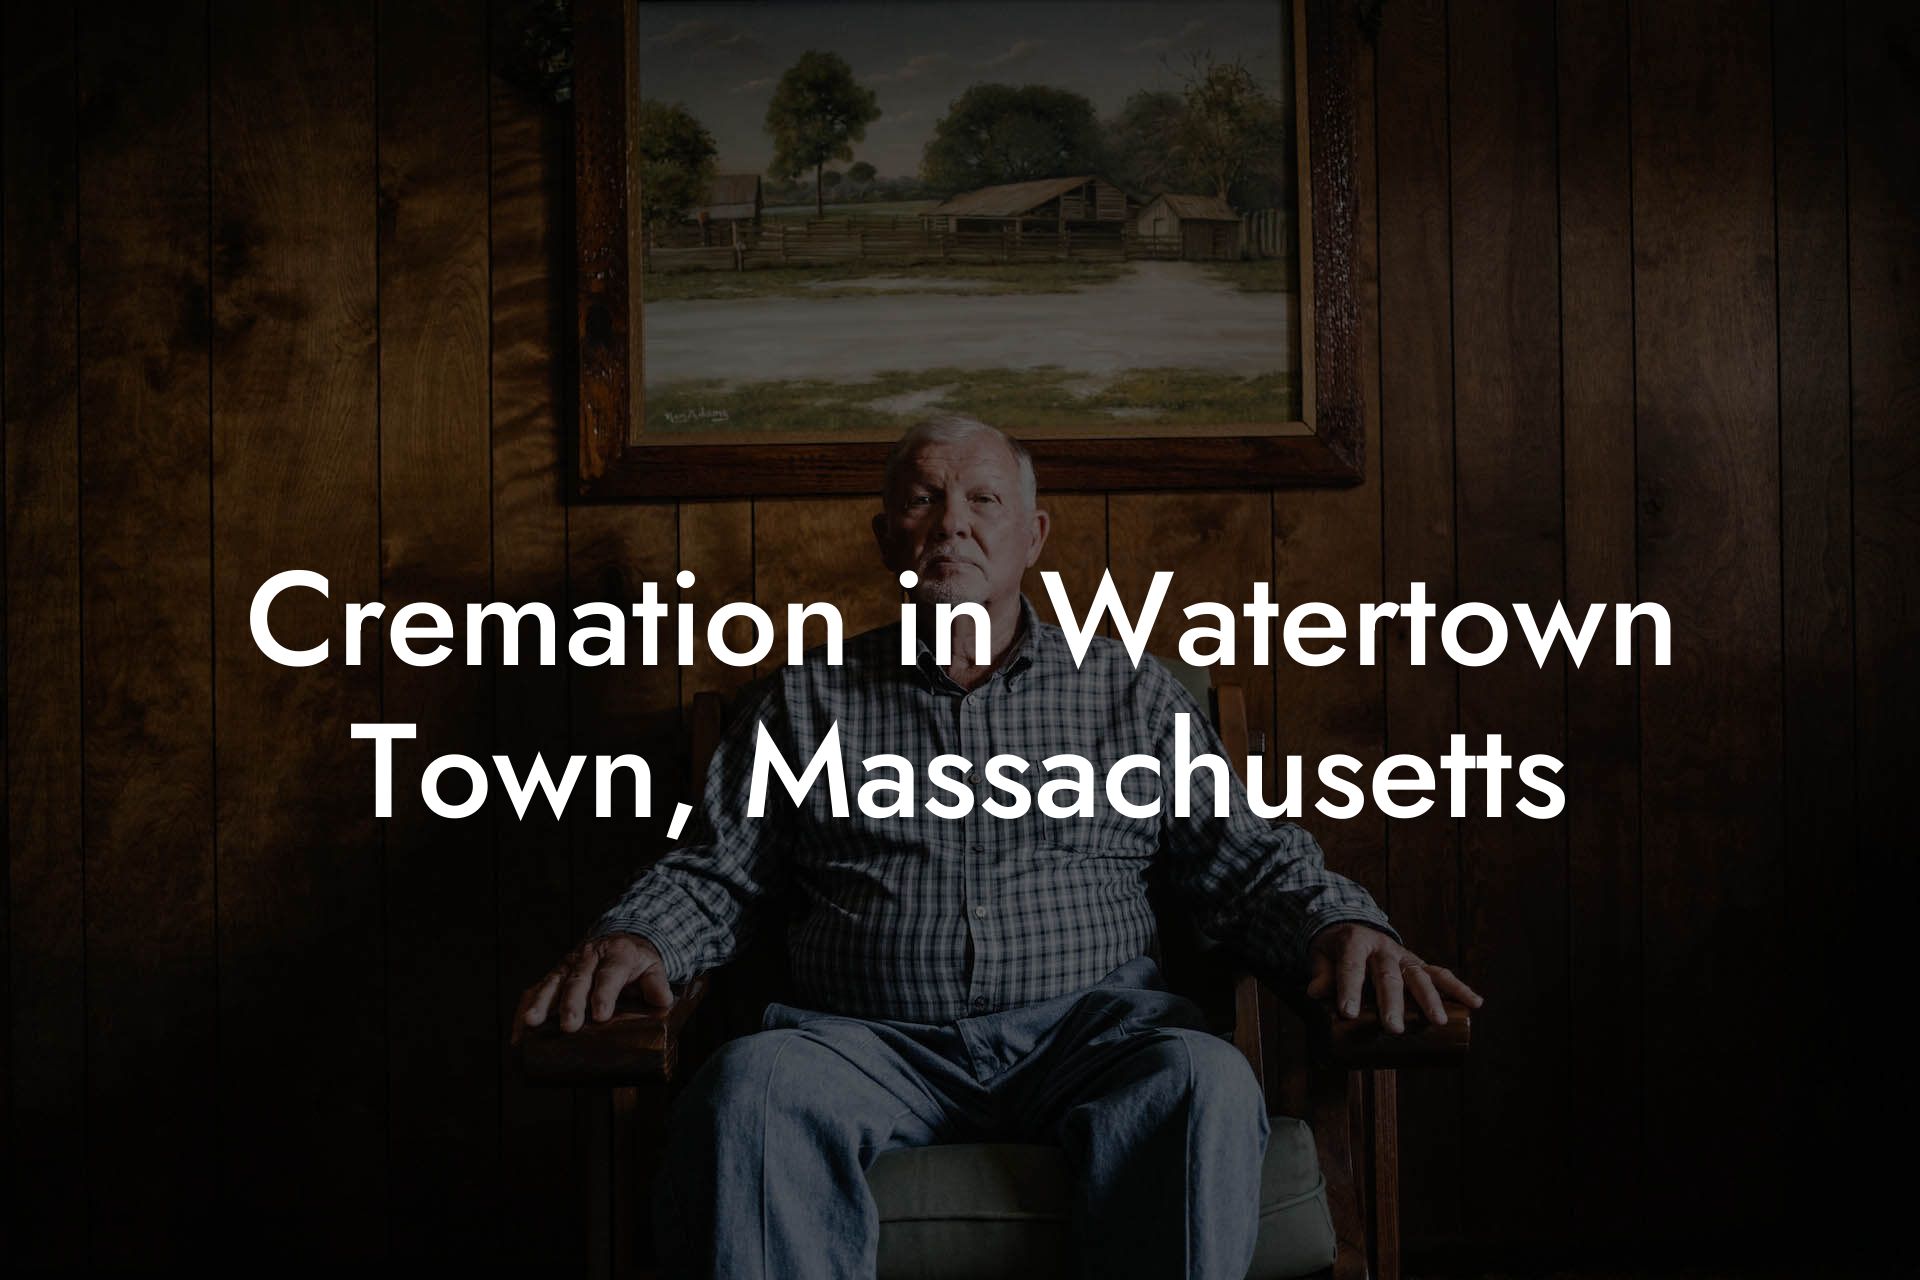 Cremation in Watertown Town, Massachusetts